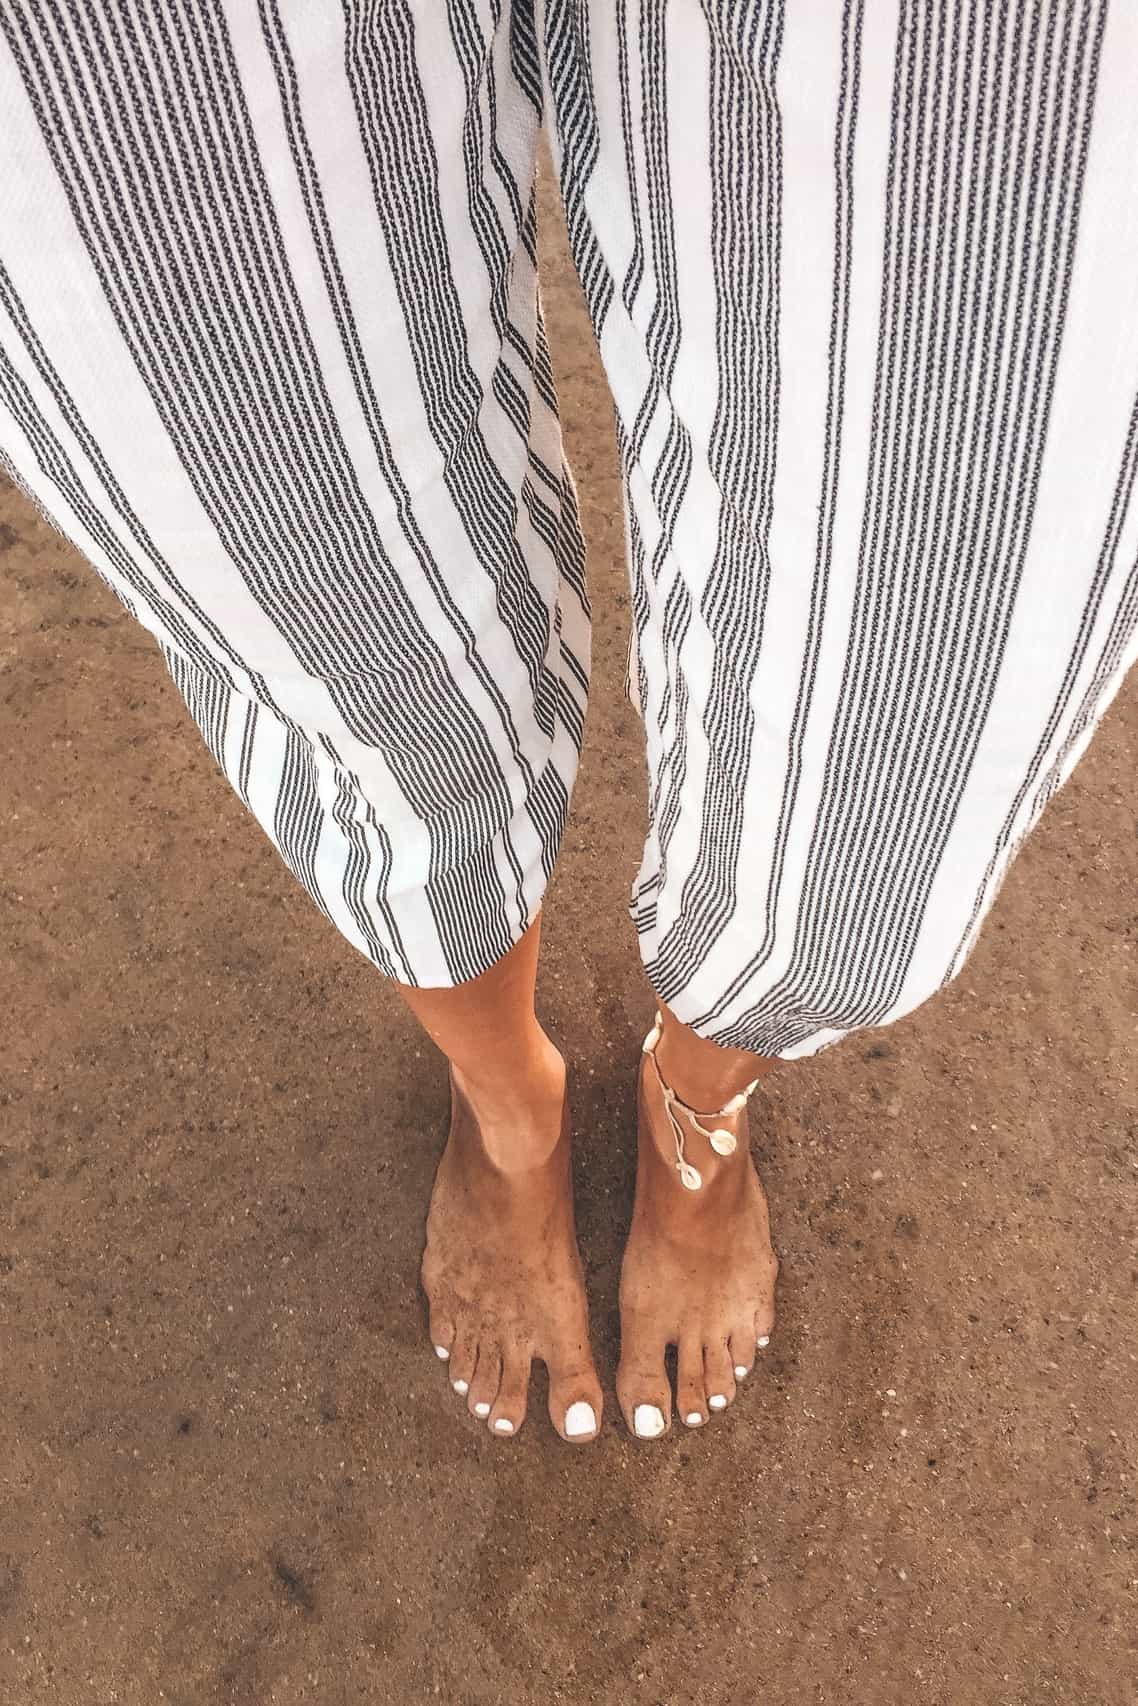 stopala sa pedikure na plaži